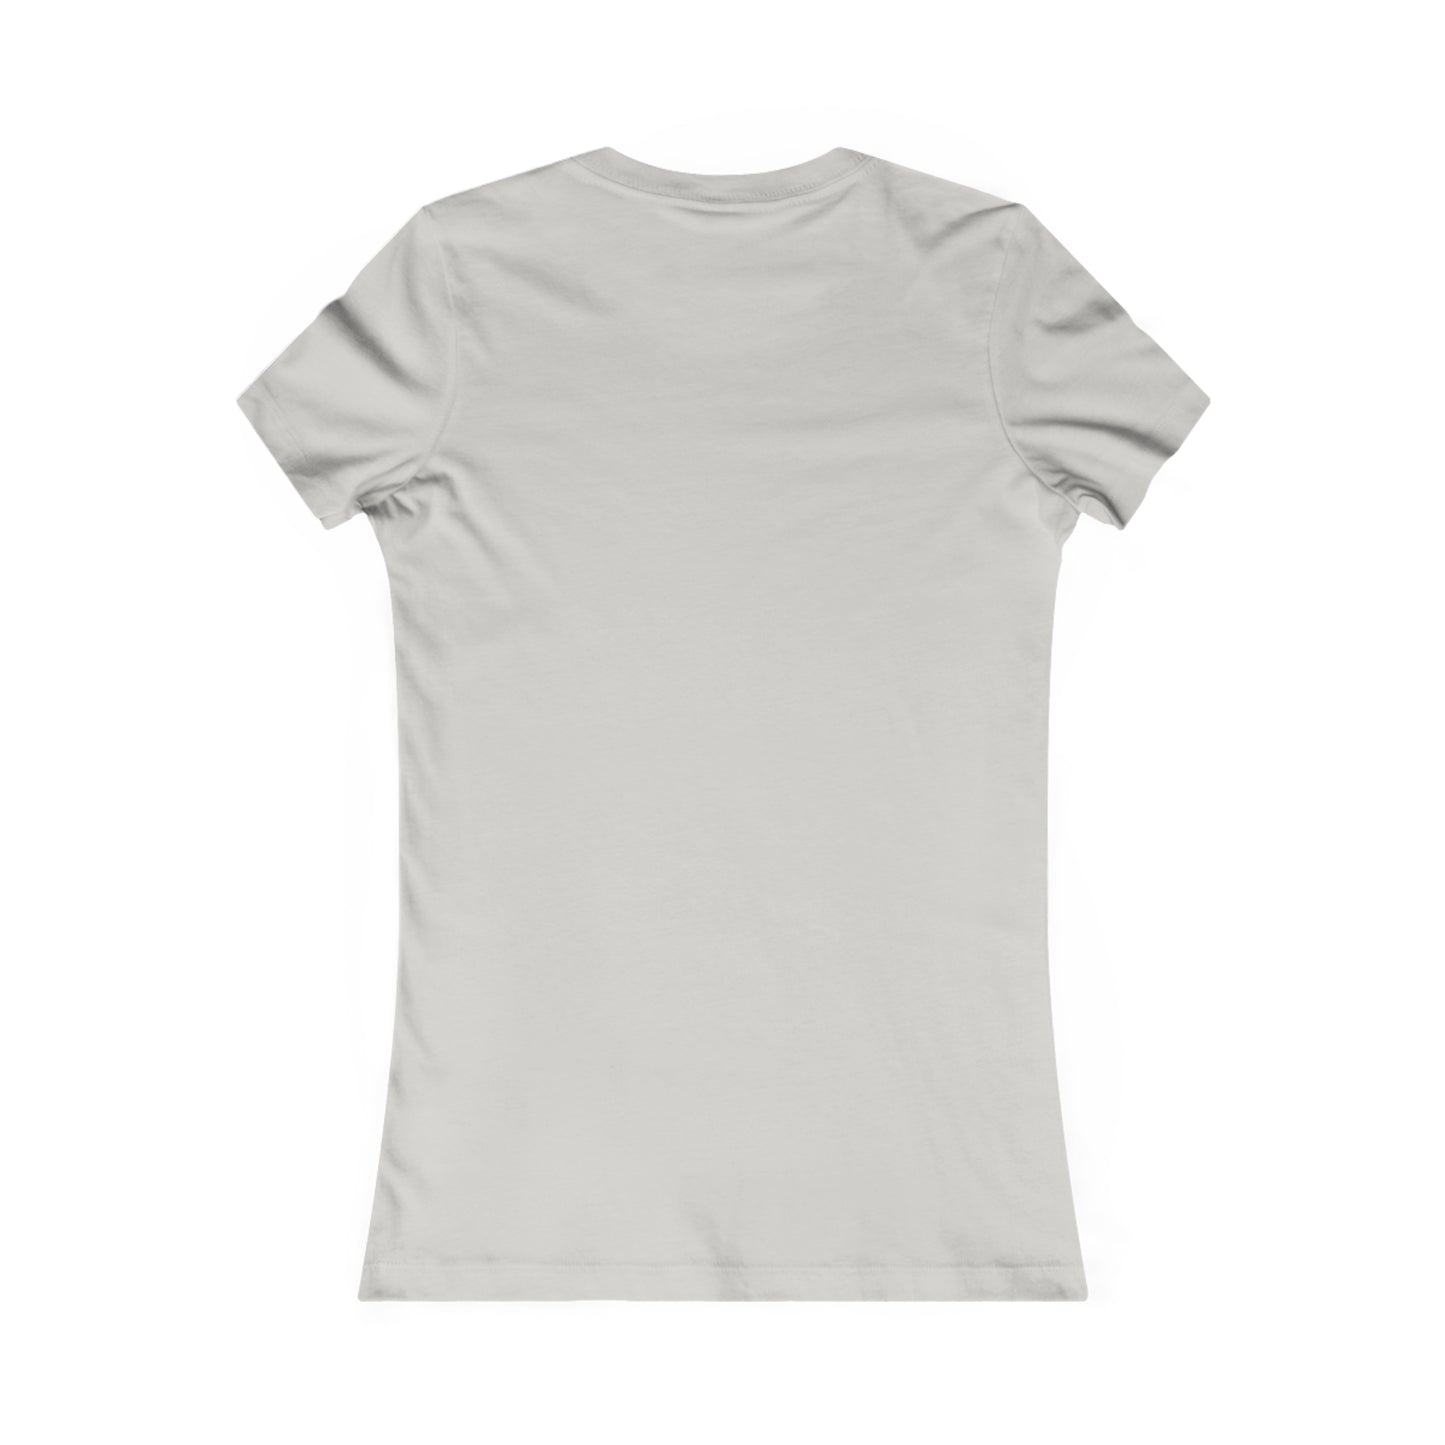 Classic Tech Seal - Ladies Favorite T-Shirt - Class Of 2013